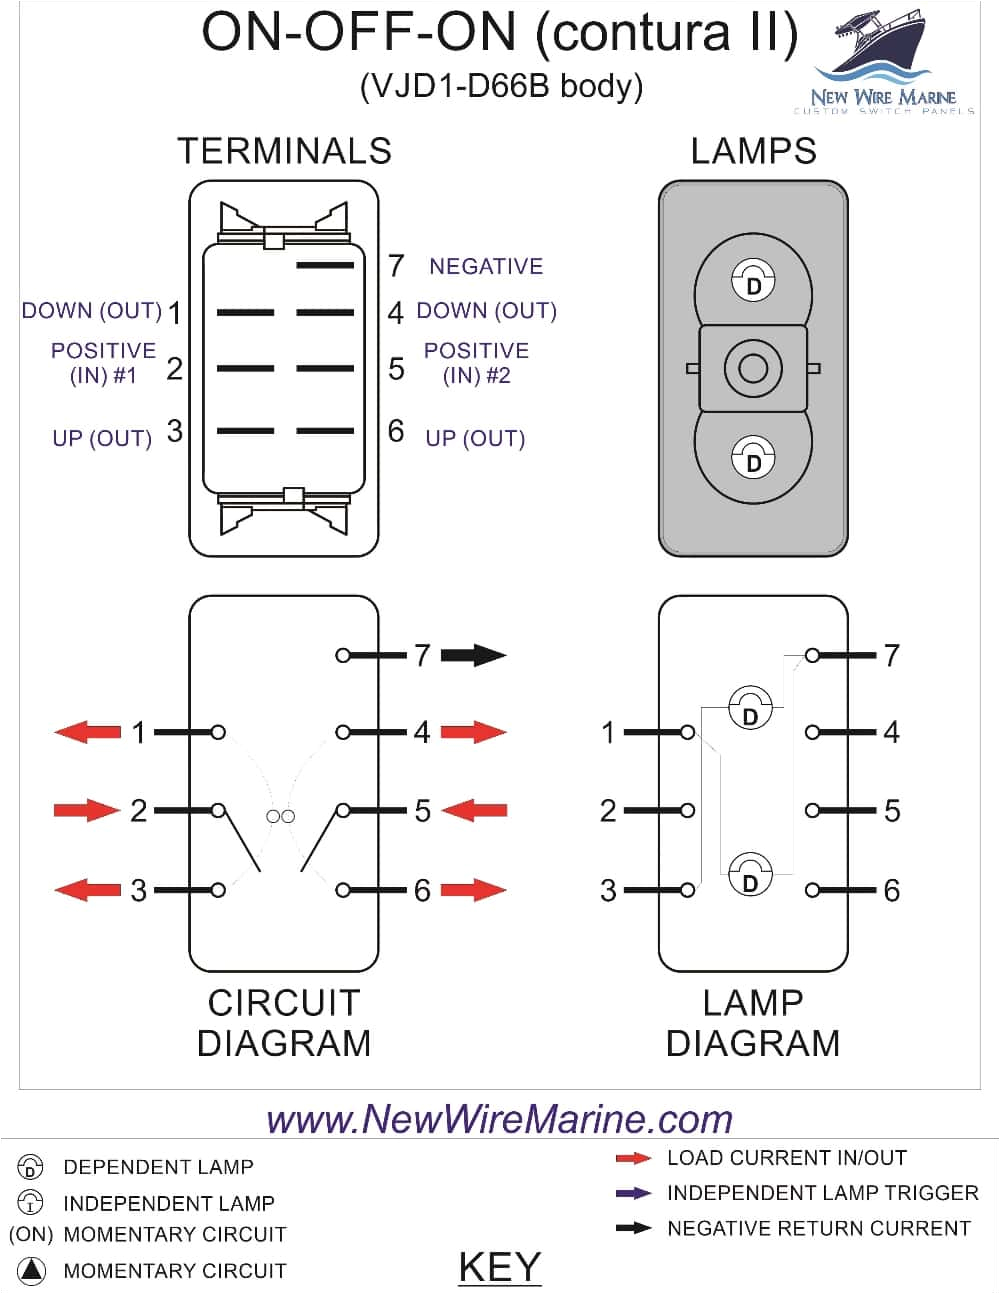 dorman wiring a light switch wiring diagram article dorman rocker switch wiring diagram wiring diagram database